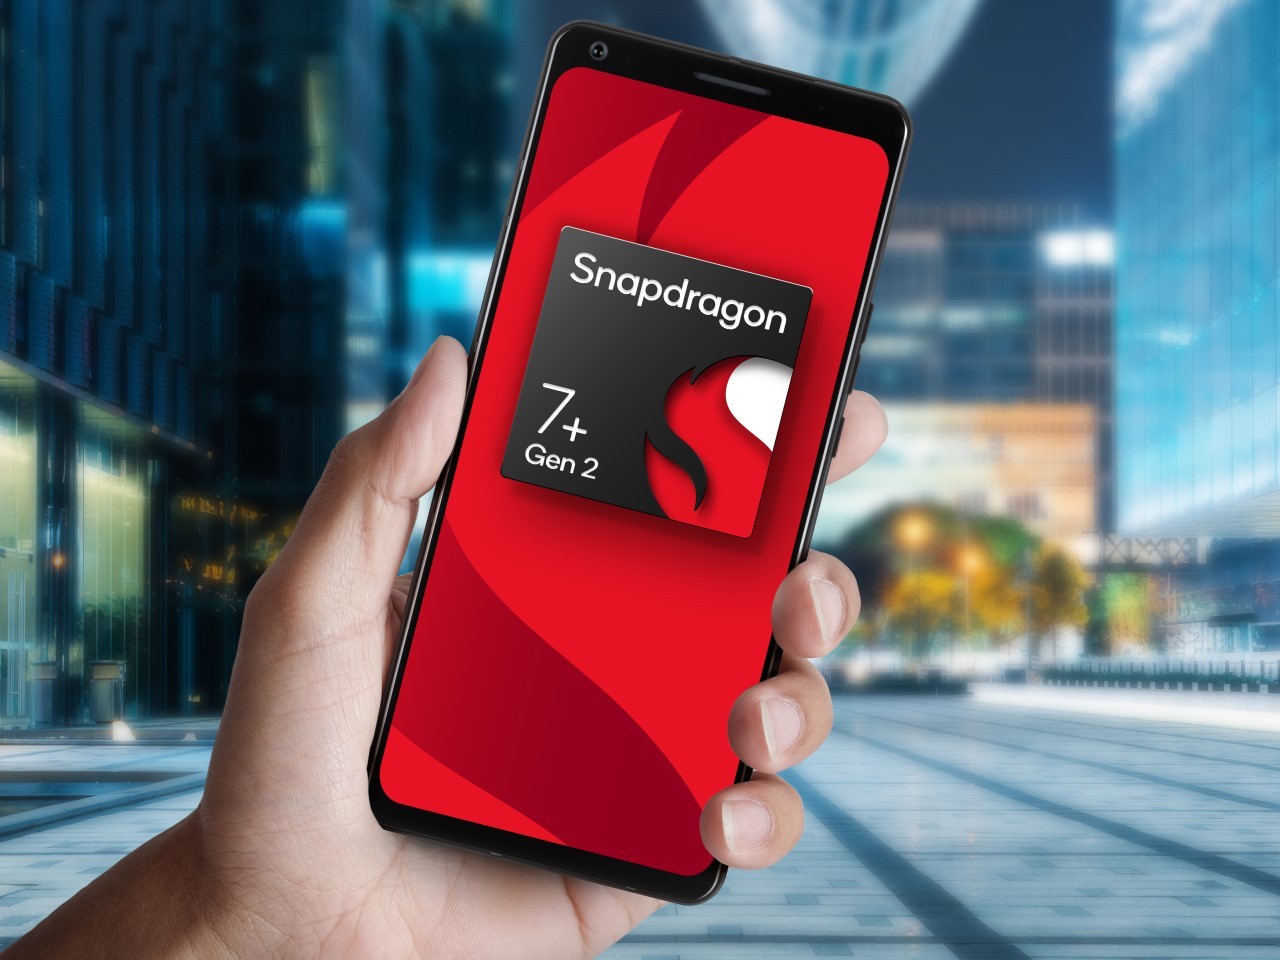 Snapdragon 7+ Gen 2 Qualcomm